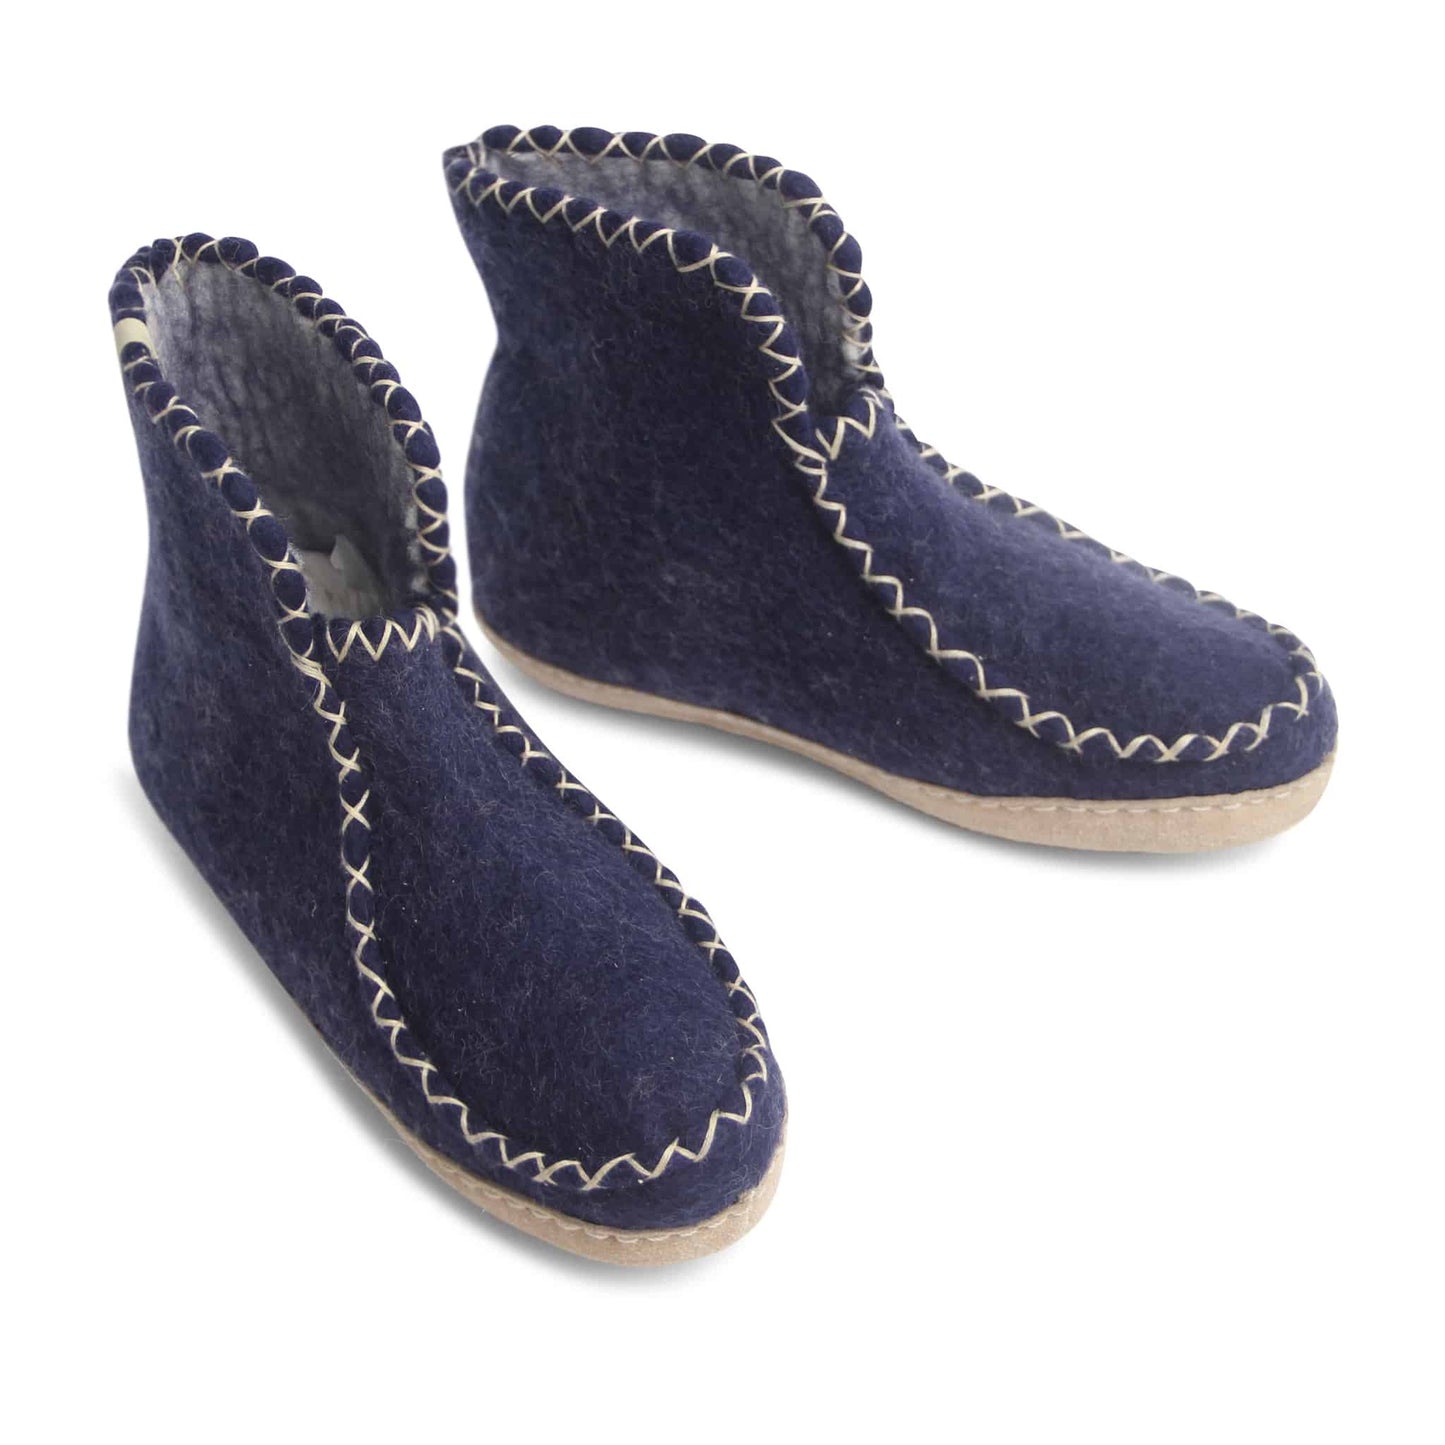 Egos Shoes Merino Wool Slipper Boot Blue